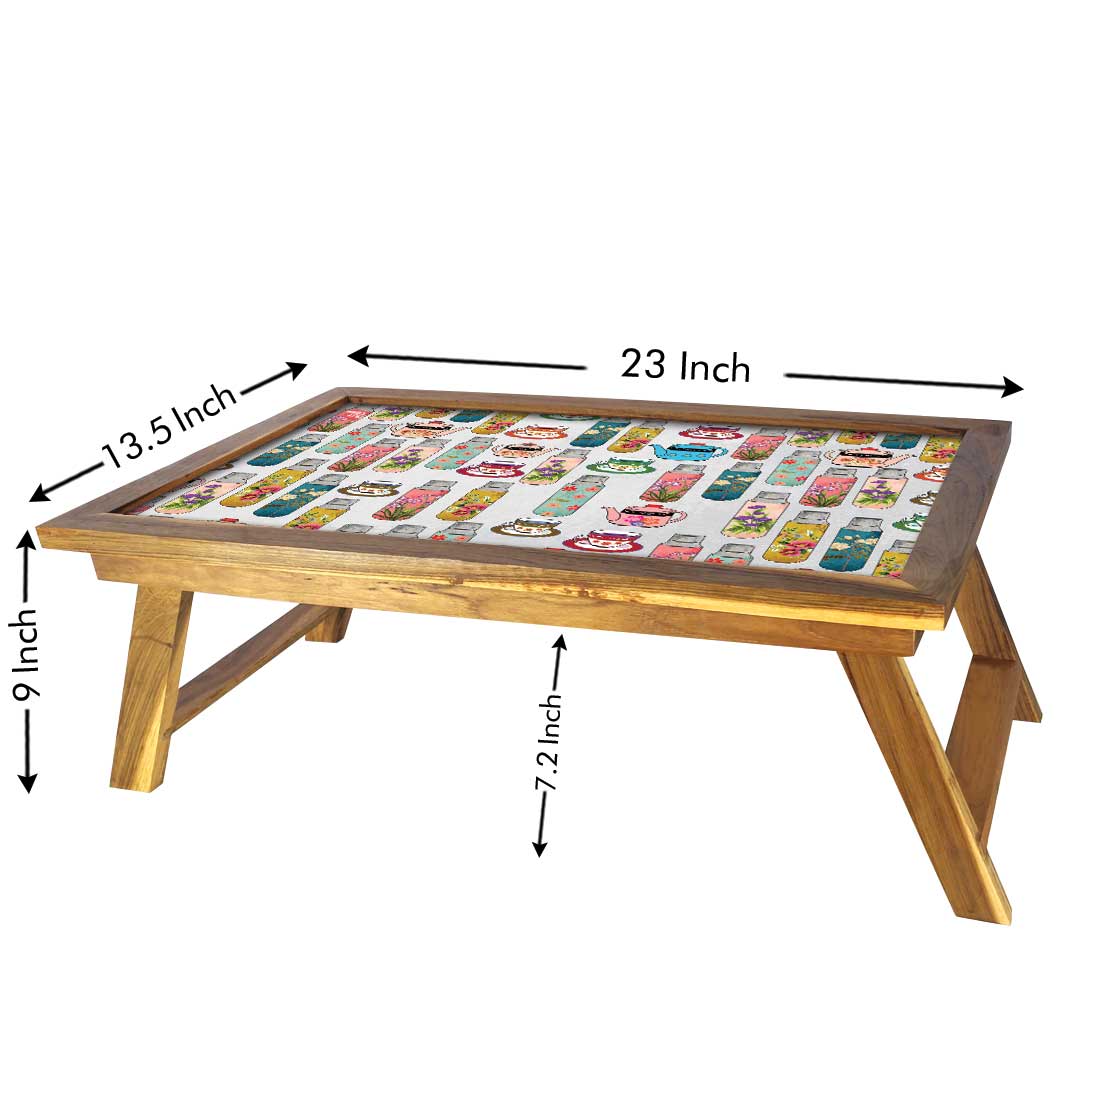 Nutcase Folding Laptop Table For Home Bed Lapdesk Breakfast Table Foldable Teak Wooden Study Desk - Tea Time Elements Nutcase